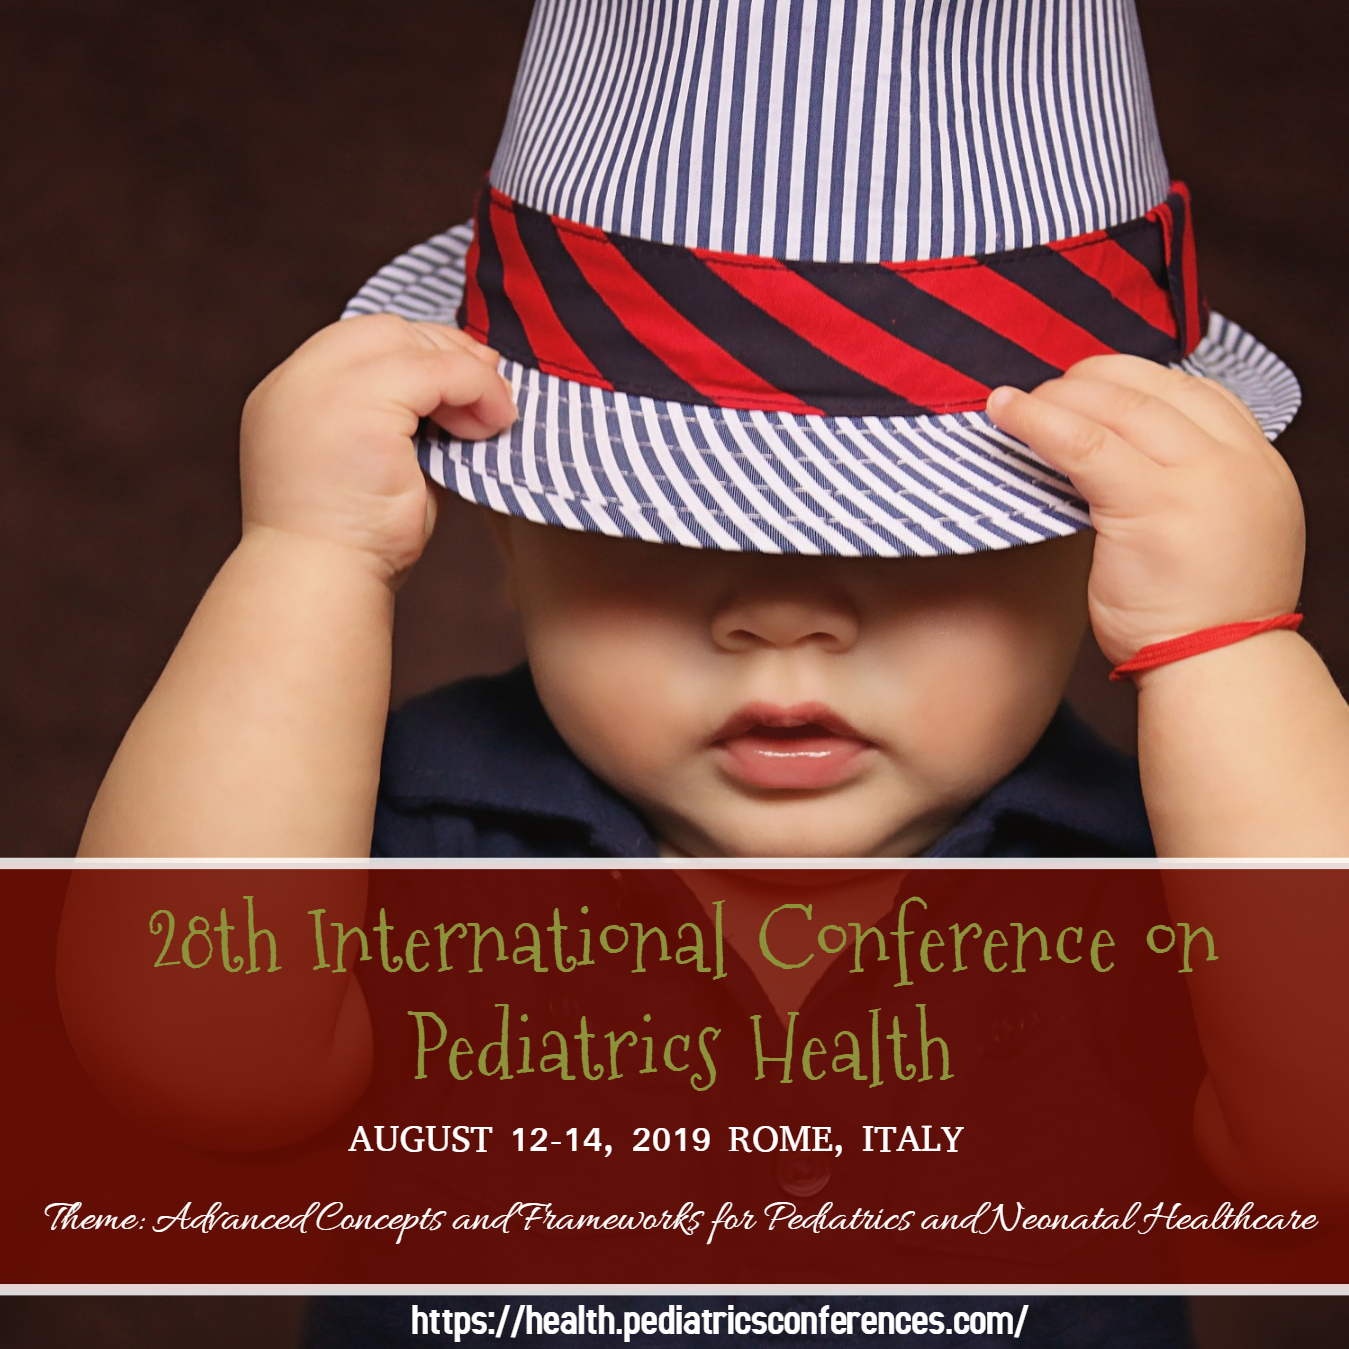 28th International Conference on Pediatrics Health, Rome, Italy